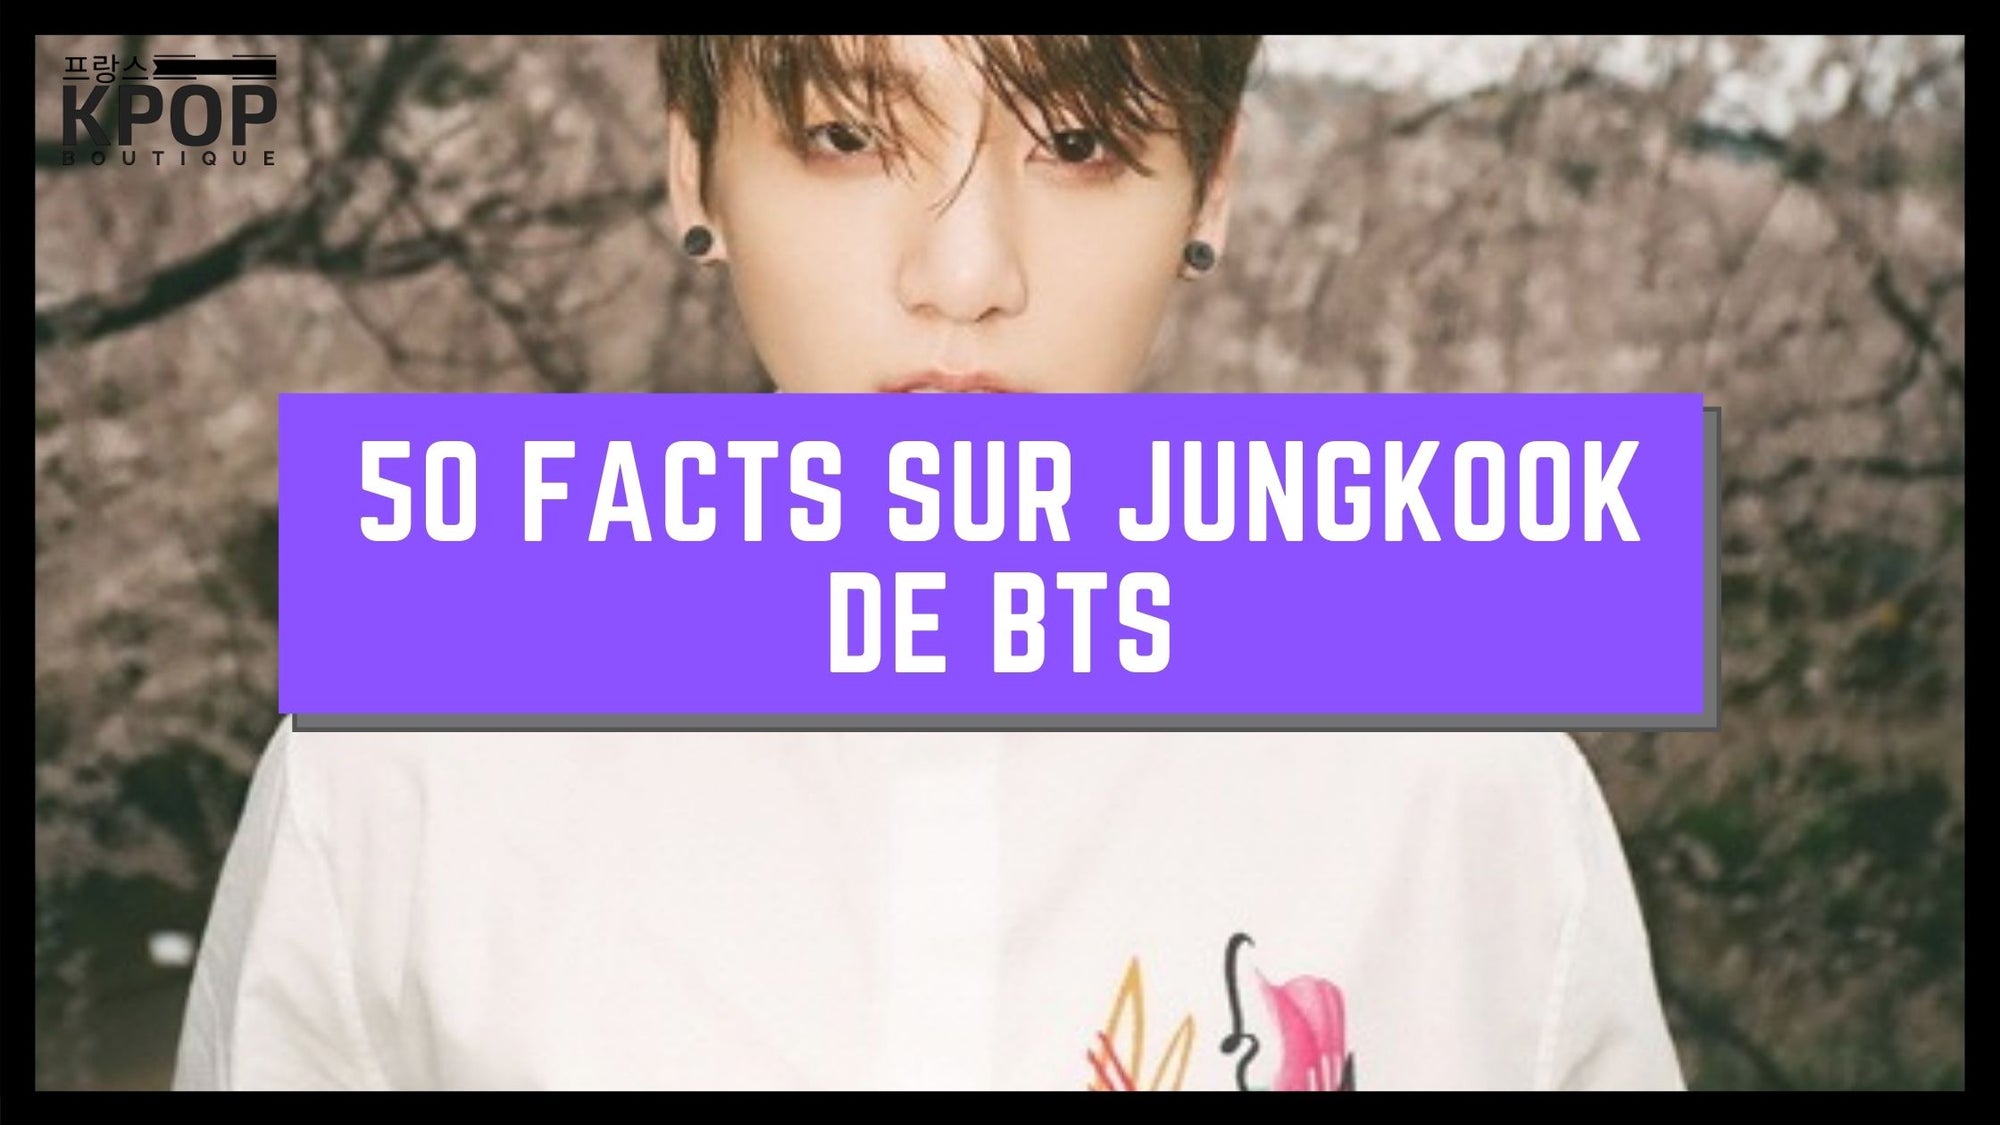 Facts jungkook bts